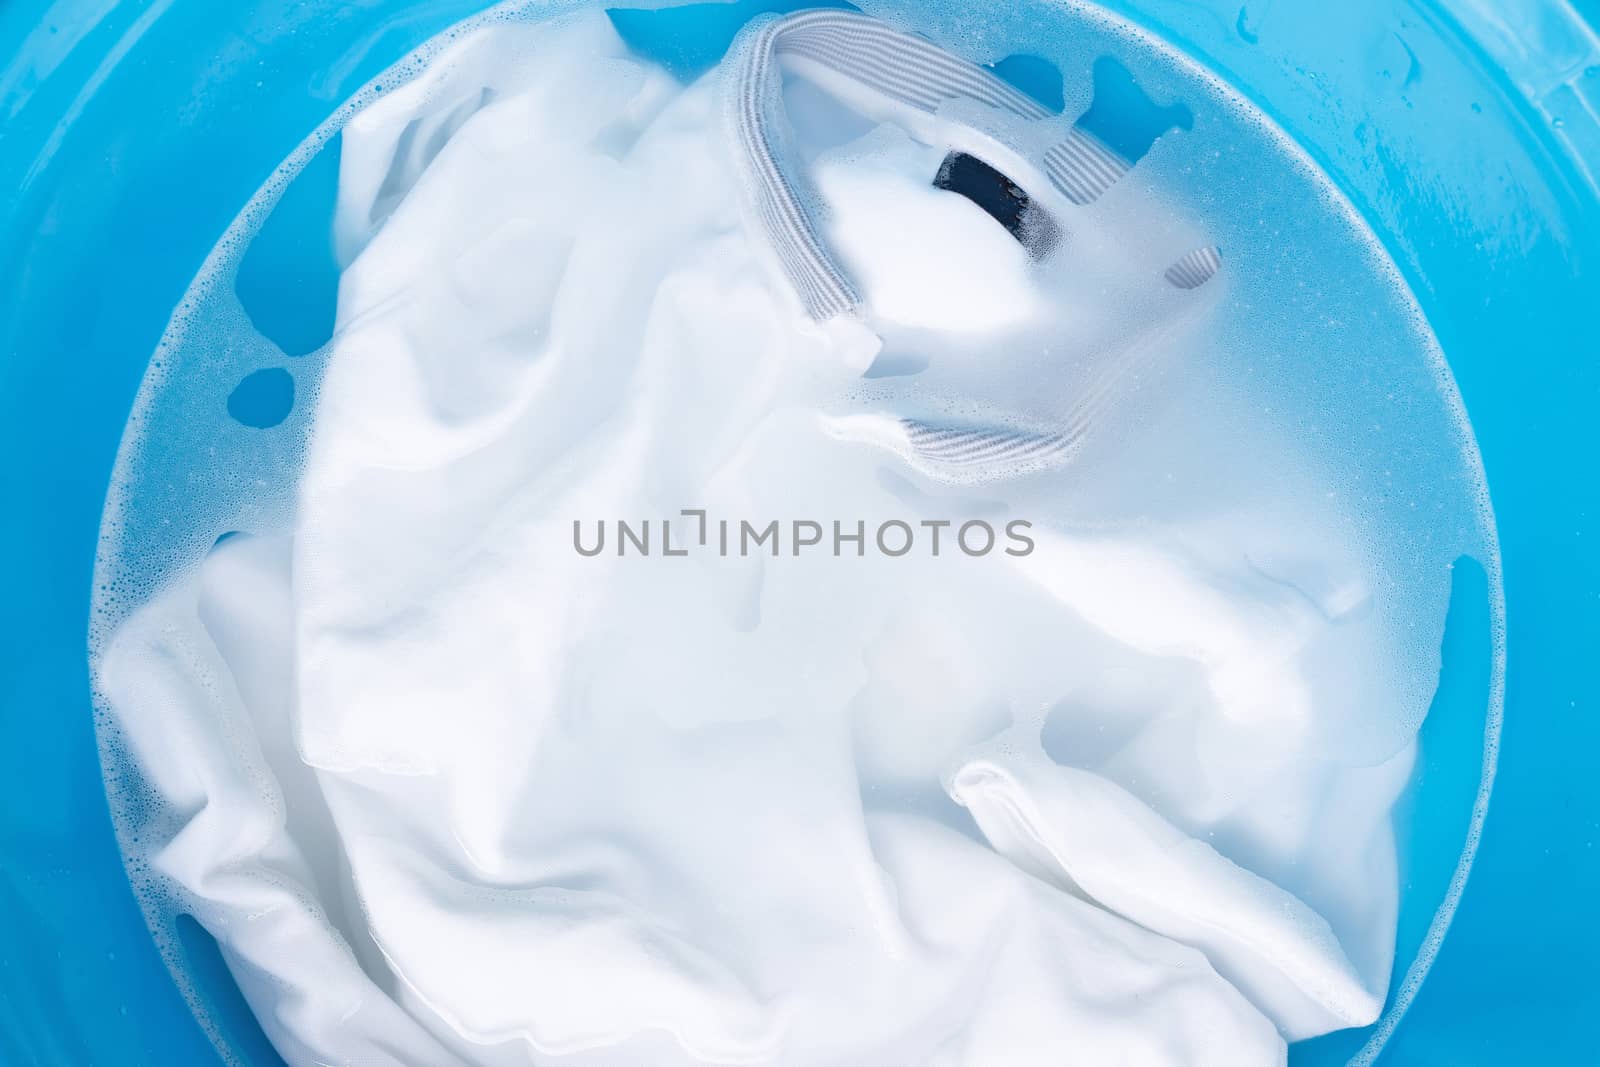 Soak a cloth before washing, white polo shirt. by Bowonpat